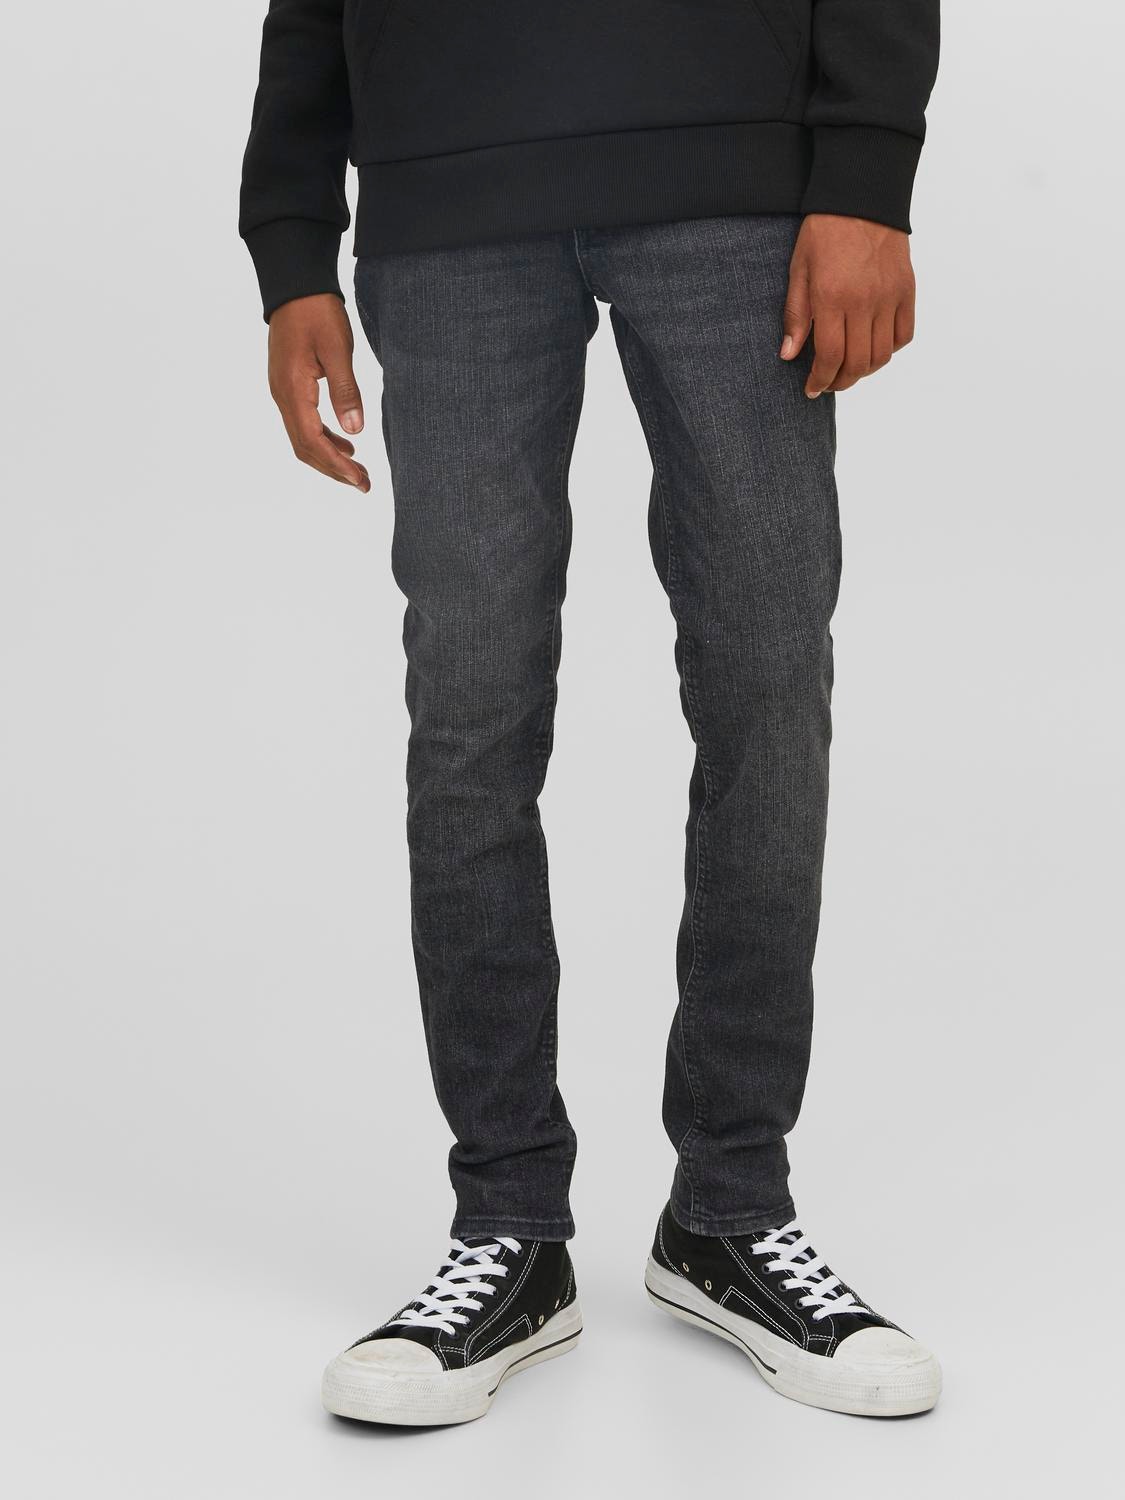 Jack & Jones JJILIAM JJIORIGINAL SQ 270 Skinny fit jeans For boys -Black Denim - 12245824